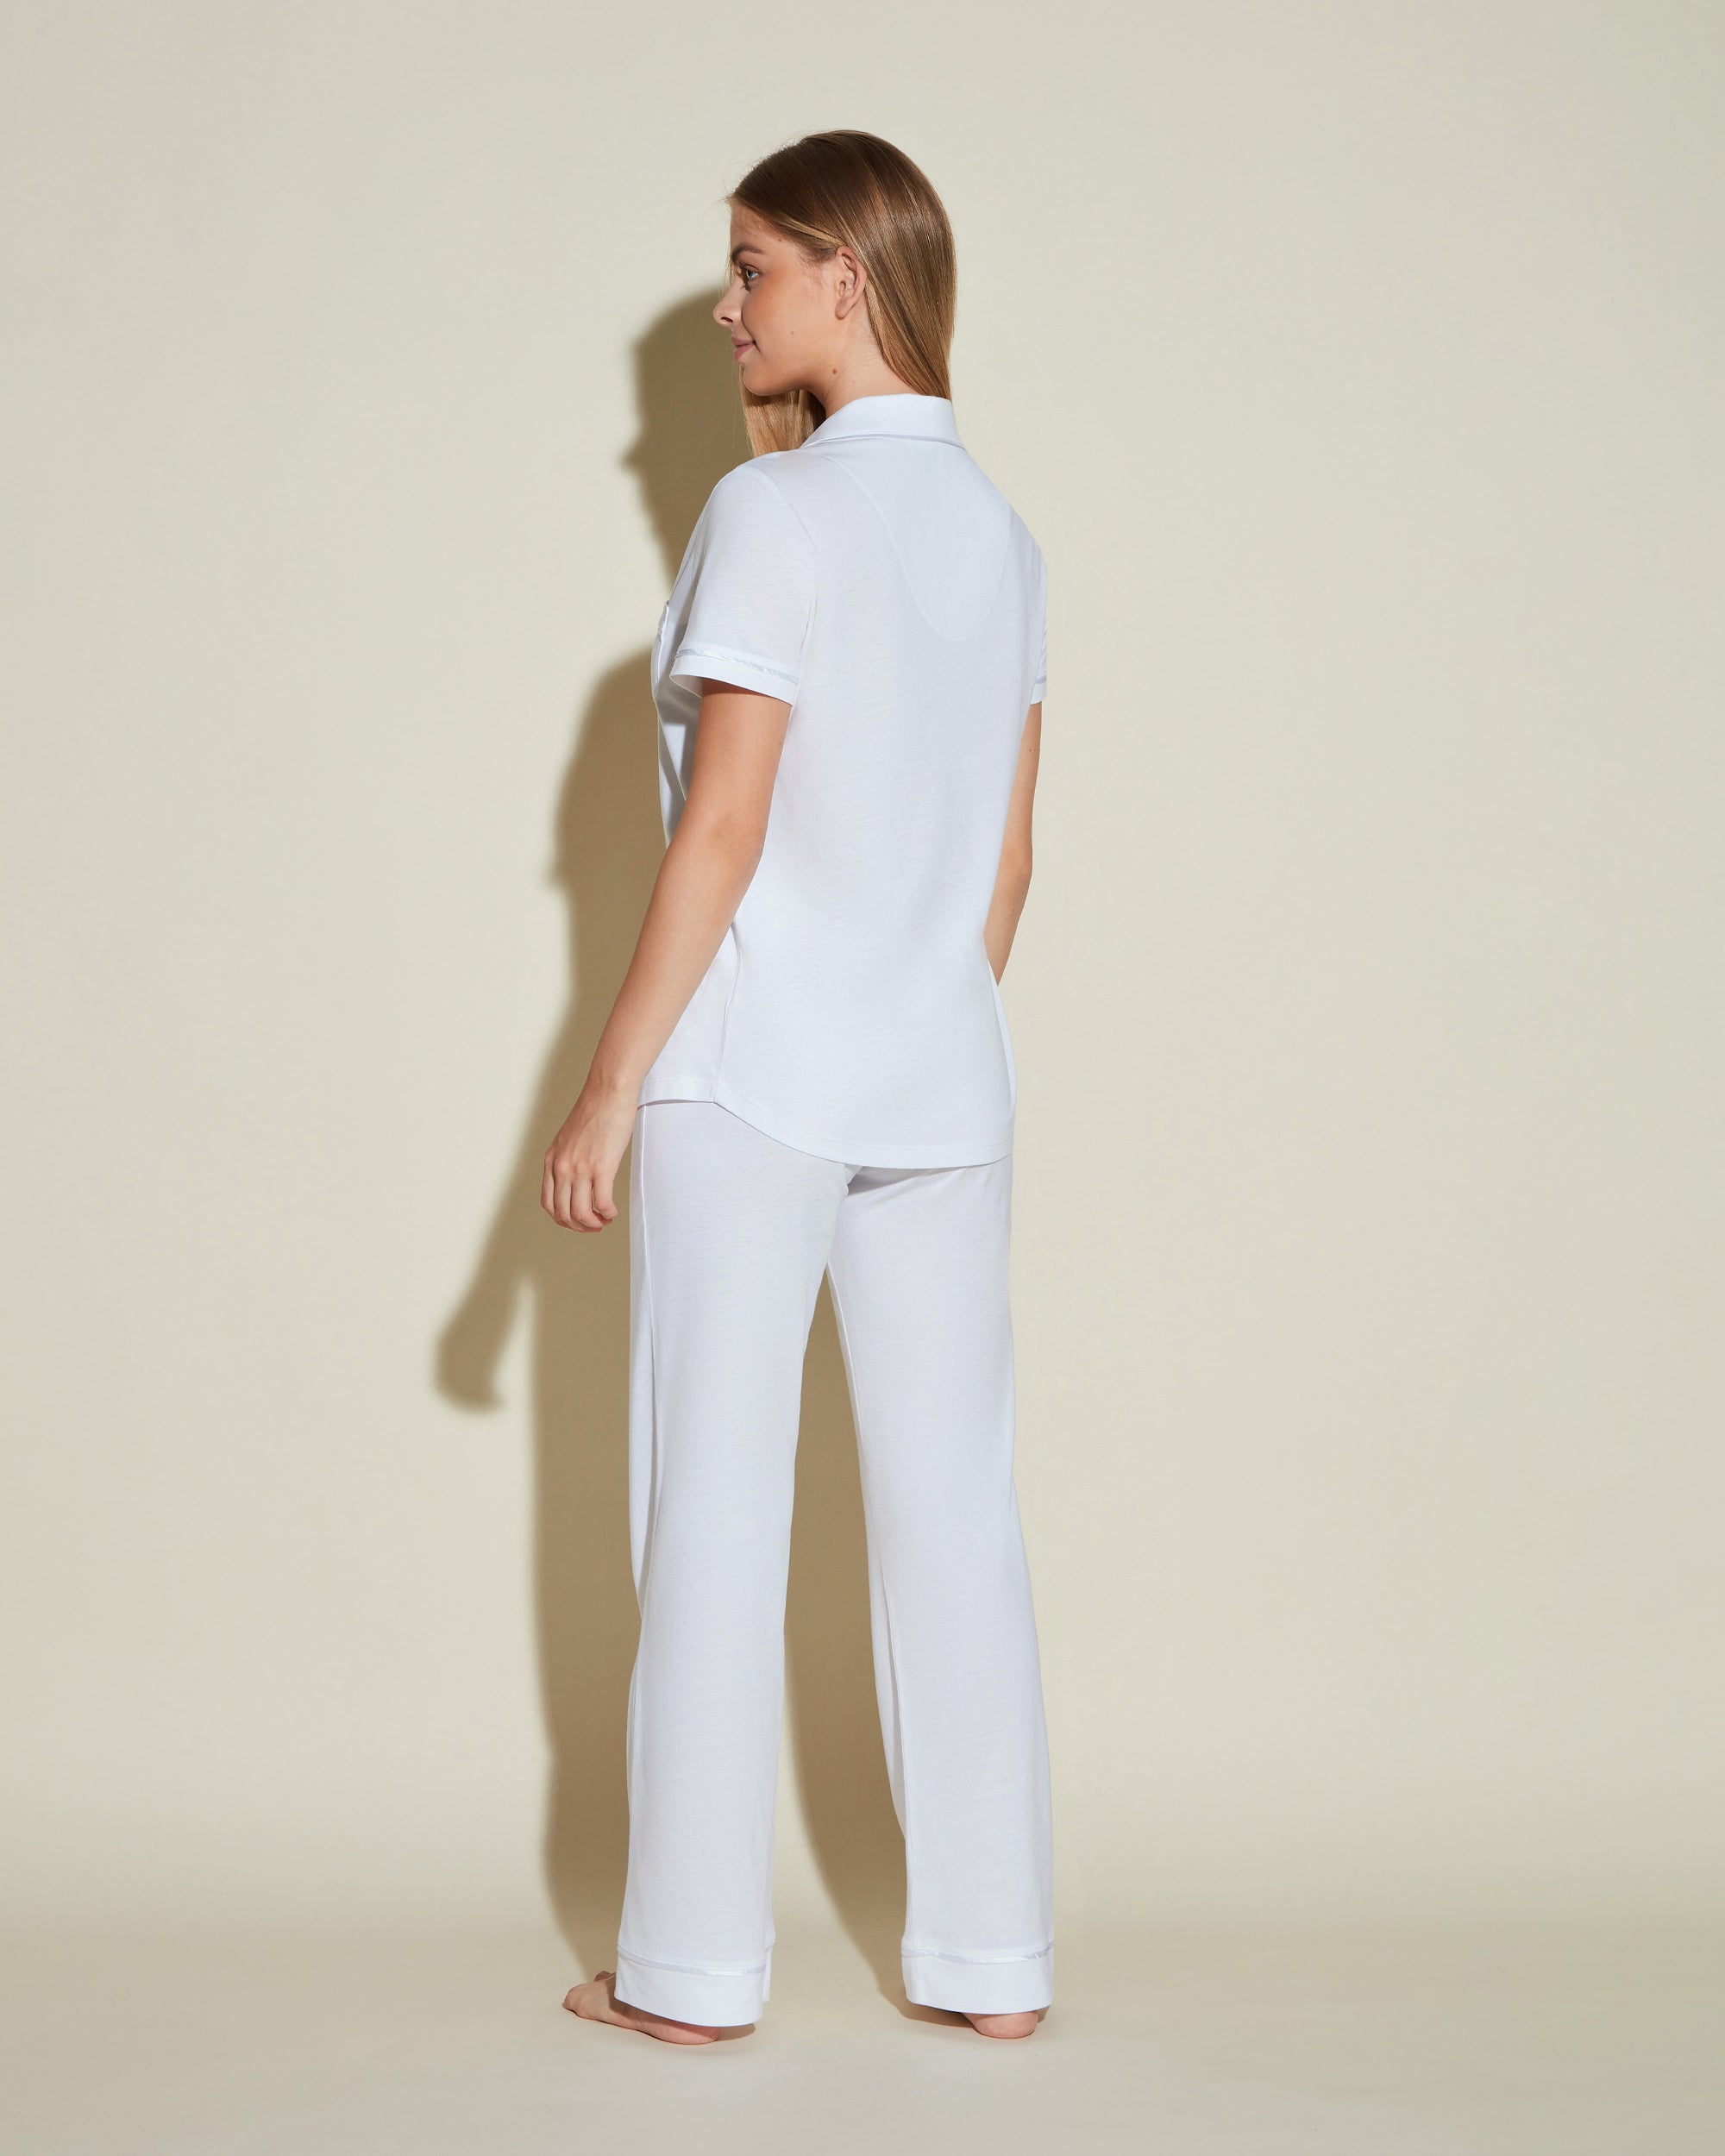 DKNY, Short Sleeve Top and Boxer Set, Short Sleeve Pyjama Sets